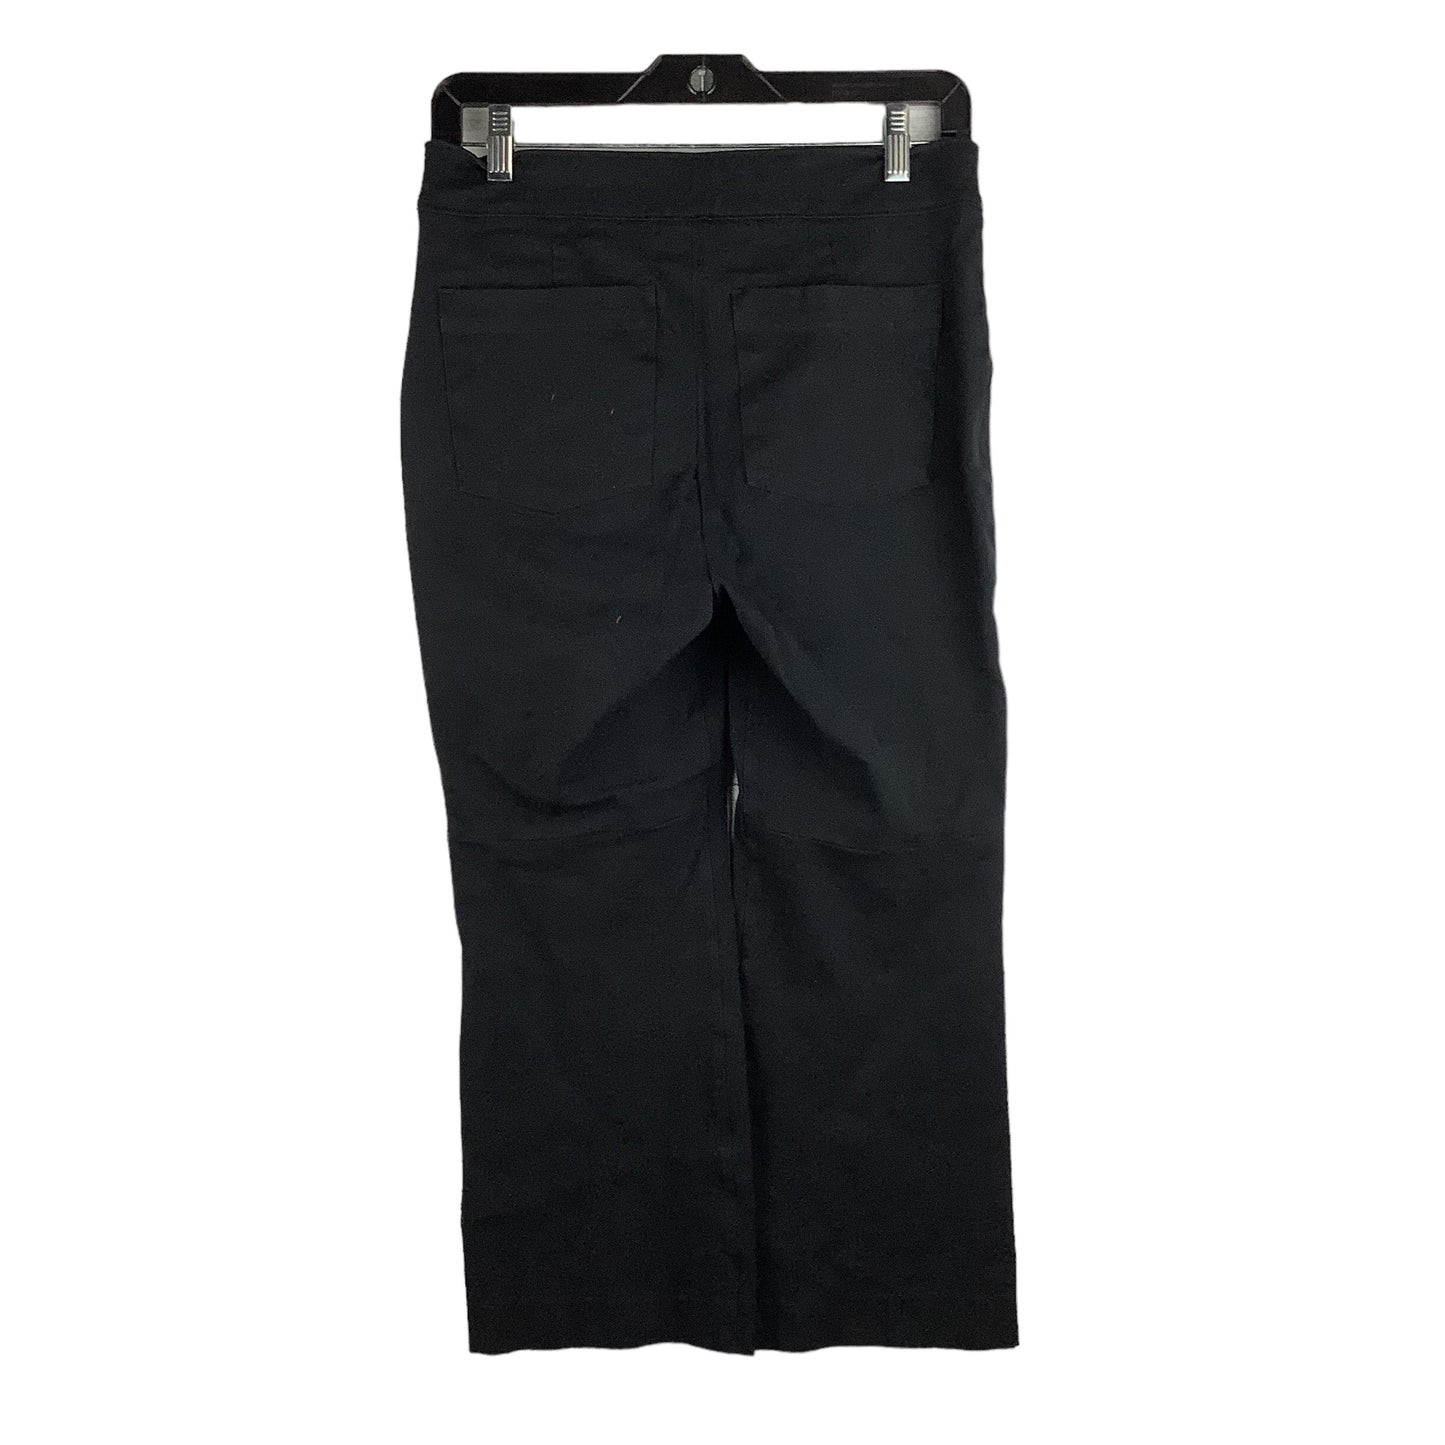 Black Pants Designer Spanx, Size M